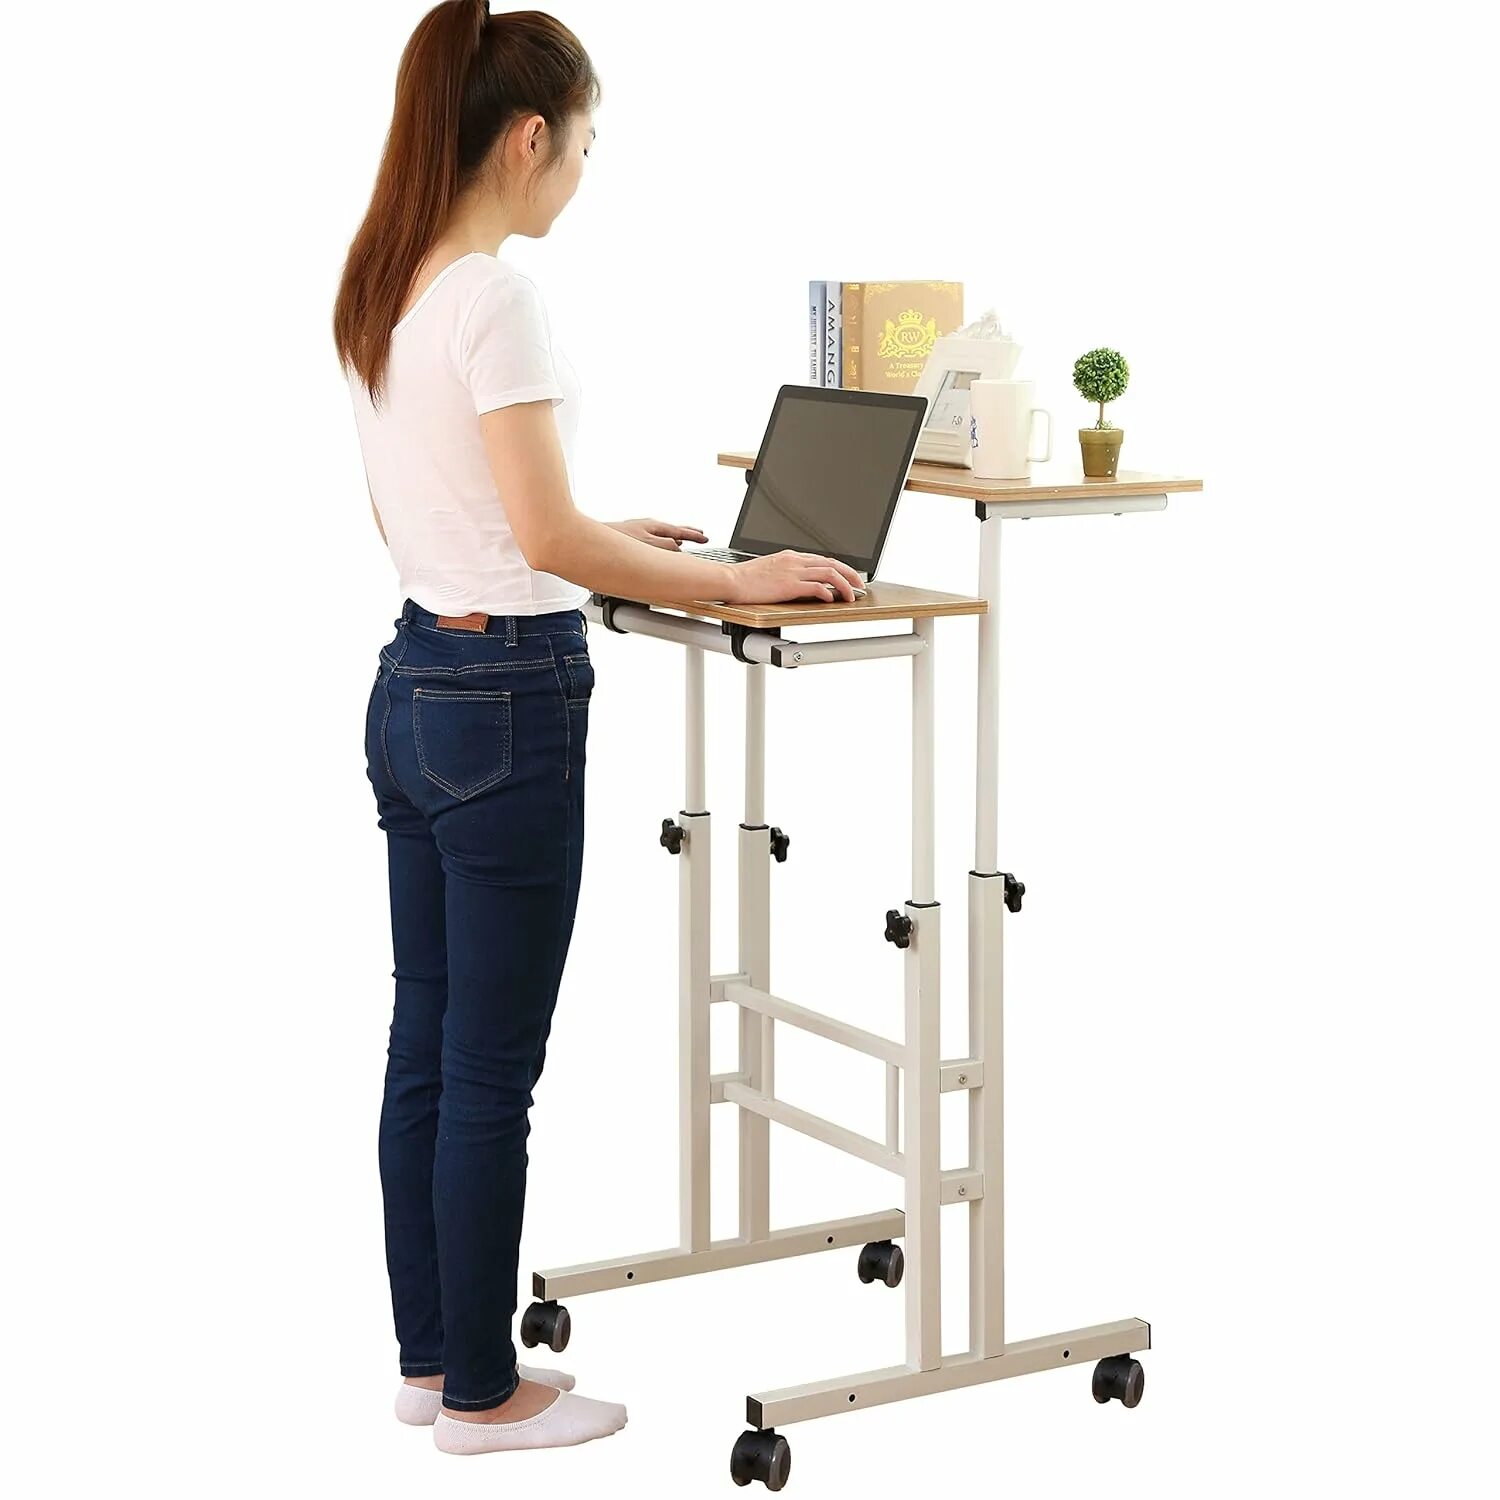 Standing desk. Стол стоя. Стоячий стол. Desk Stand на стол. Компьютерный стол стоячий трансформер.